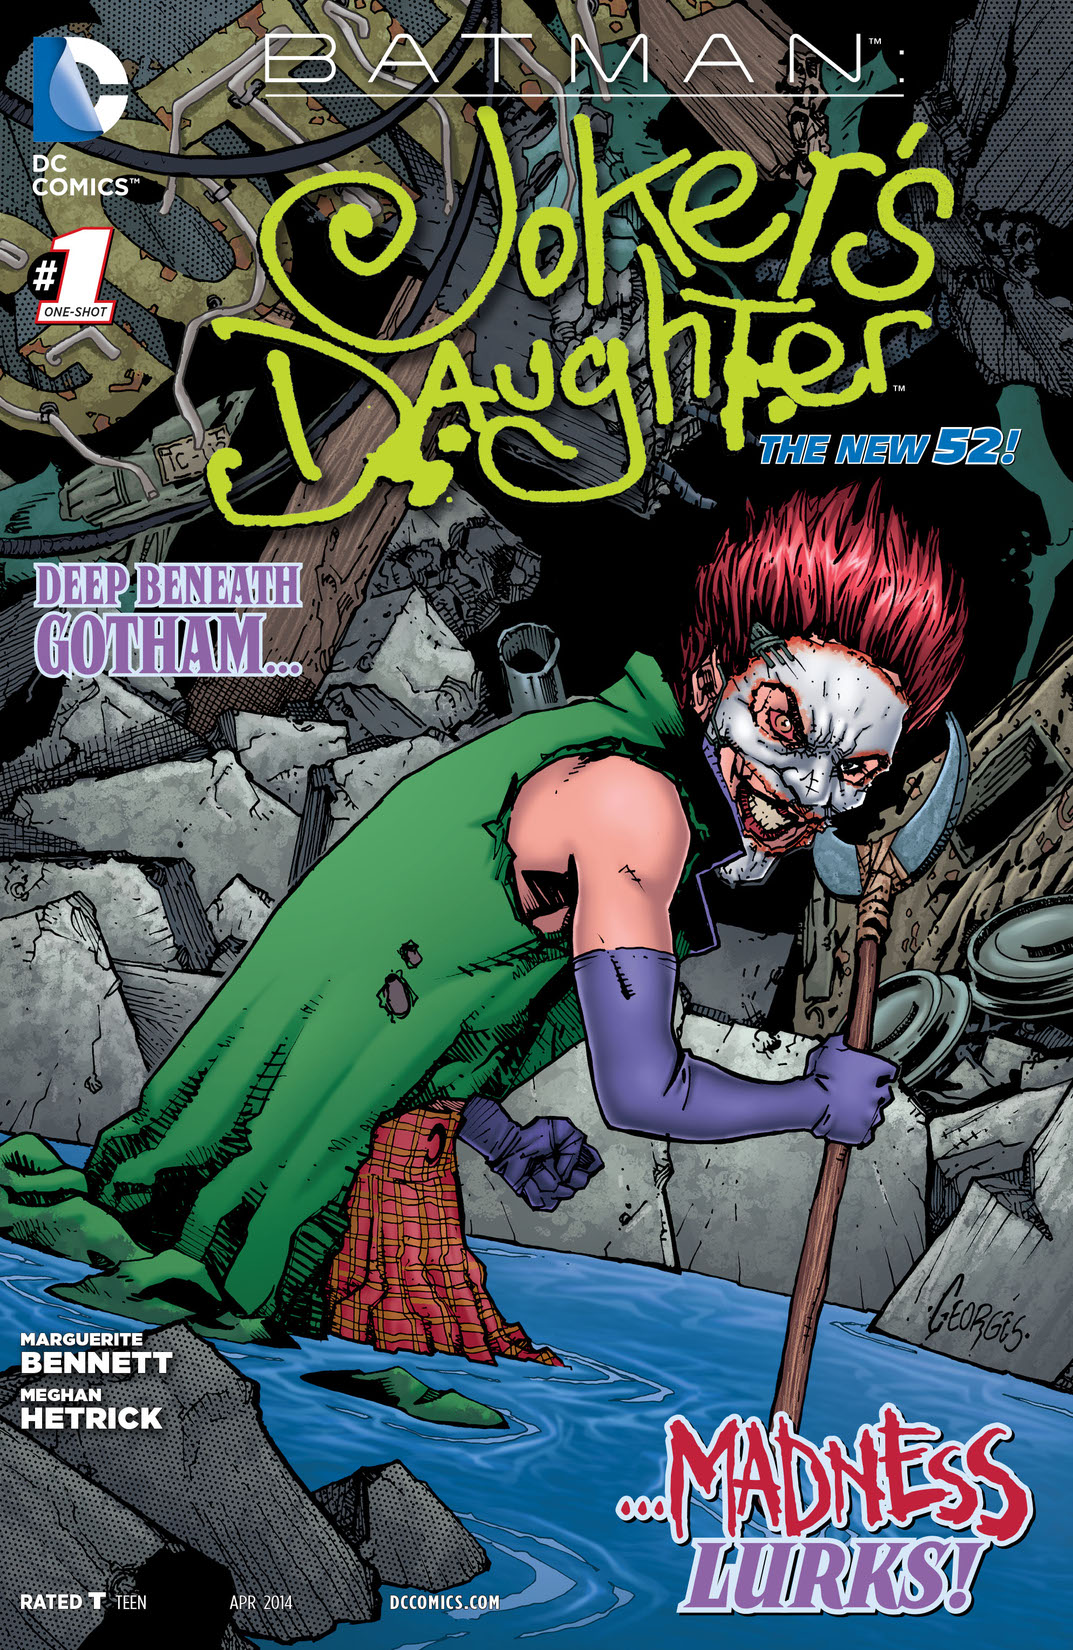 Batman: Joker's Daughter #1 preview images